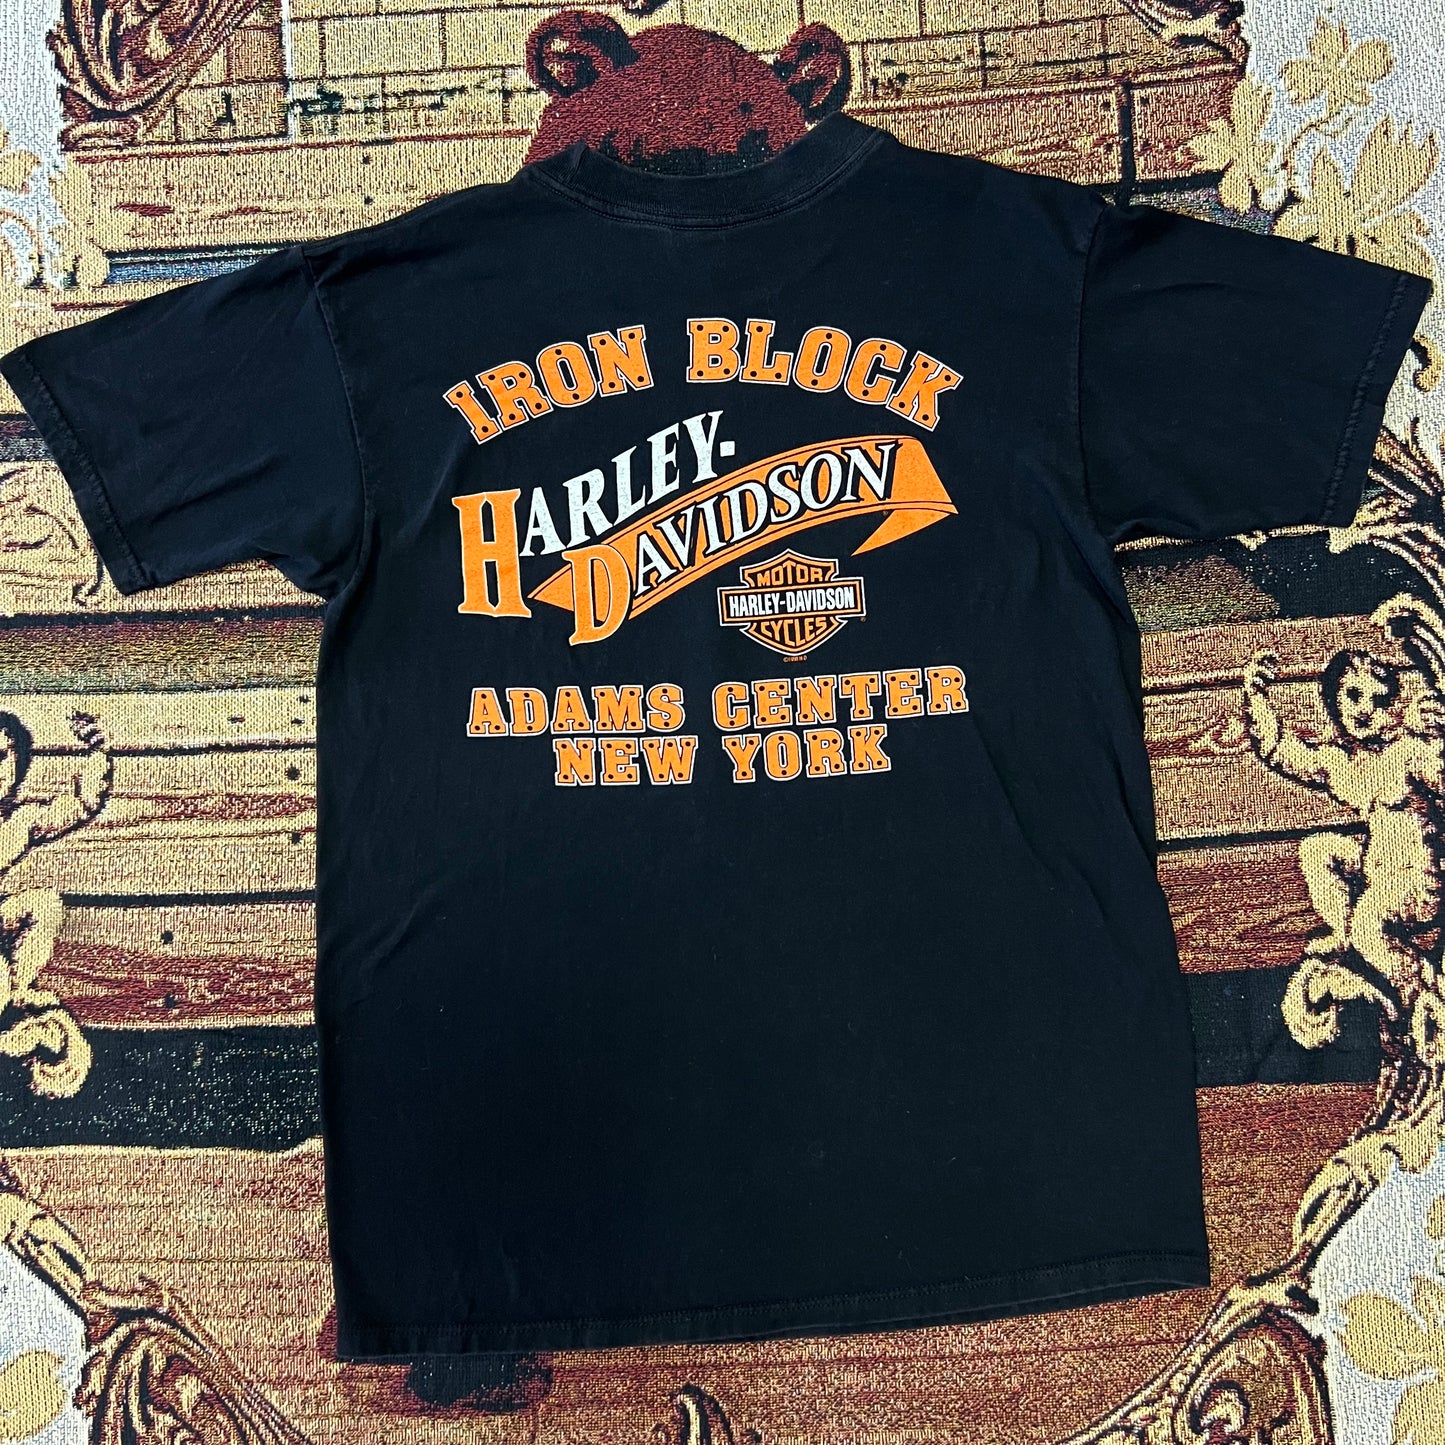 Vintage Harley Davidson Iron Block Adams centet NY T-Shirt